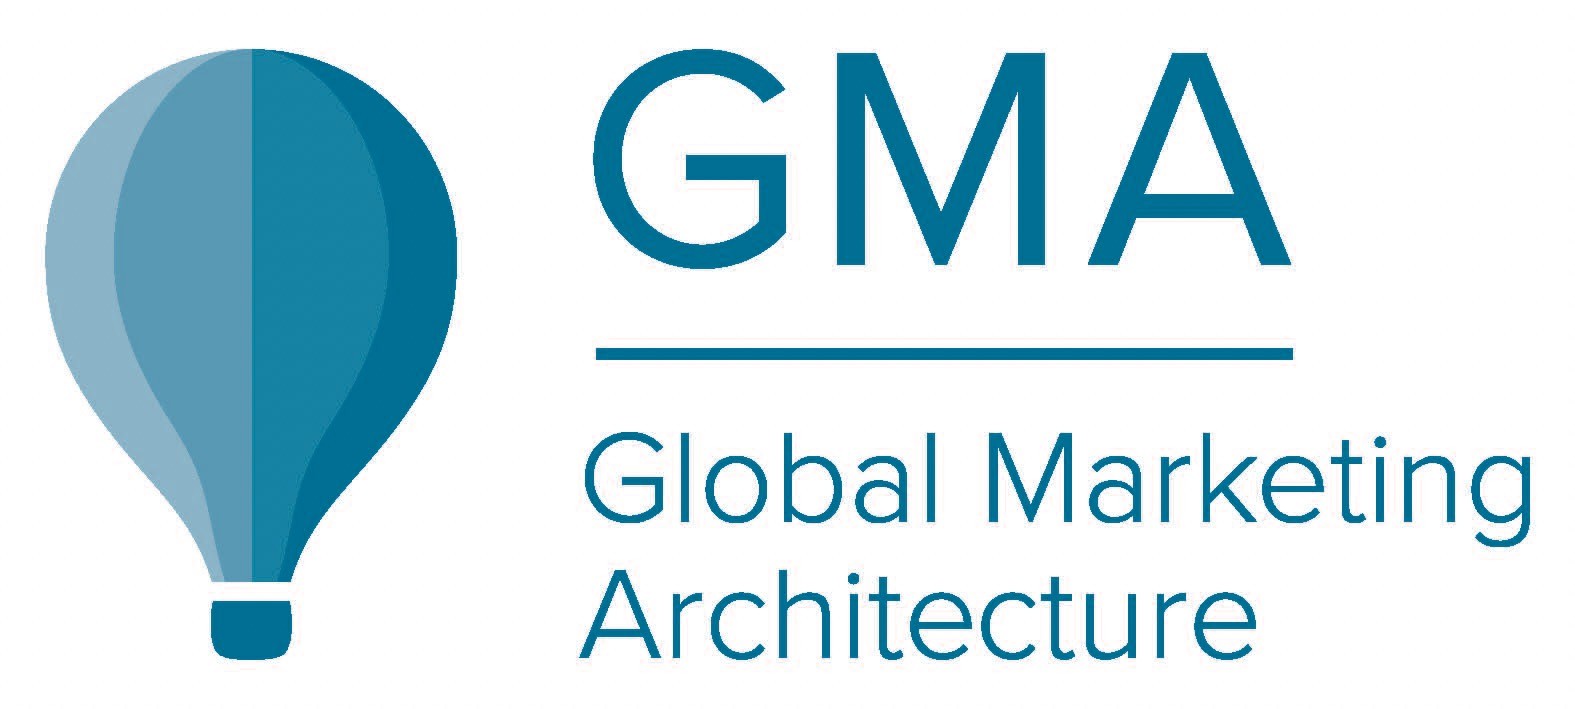 Global Marketing Architecture